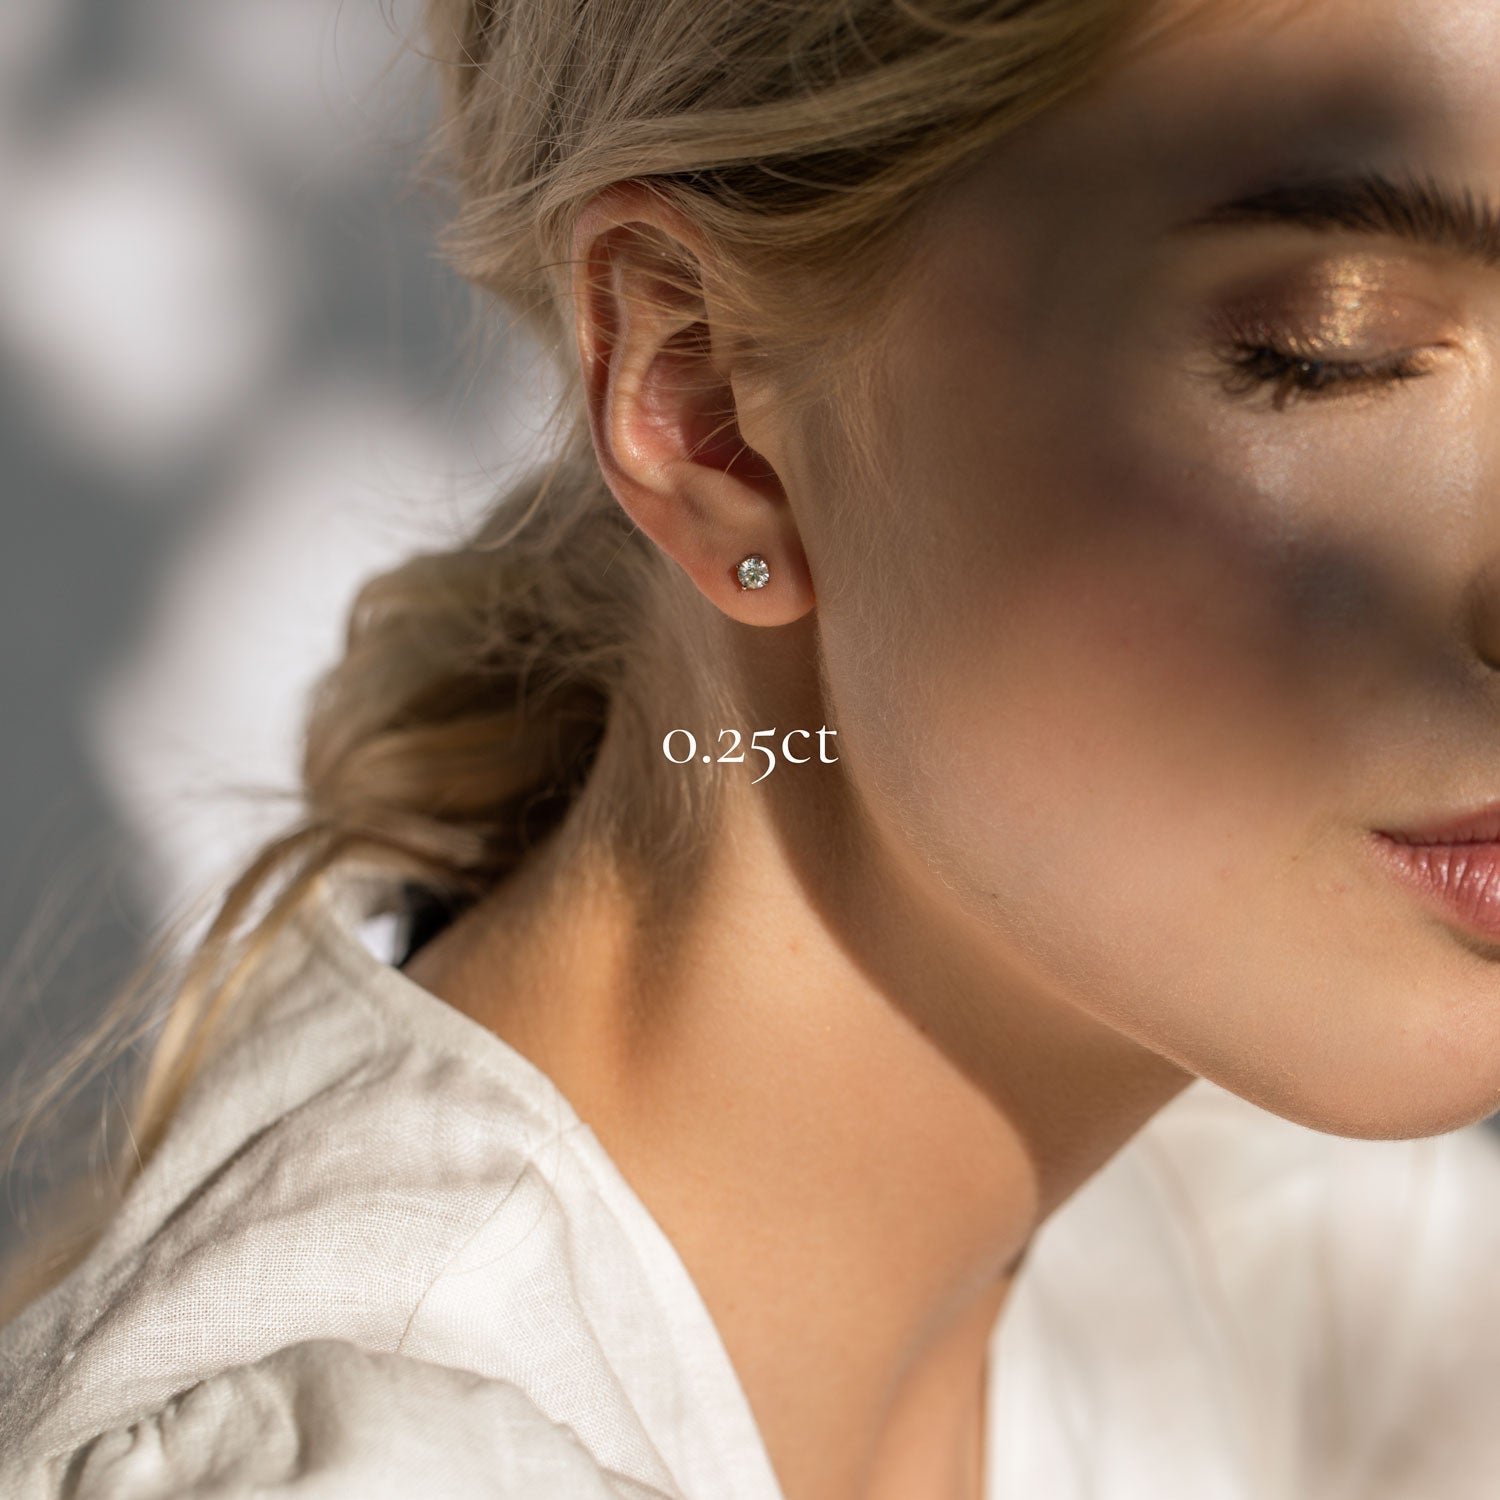 Soli Brilliant earrings